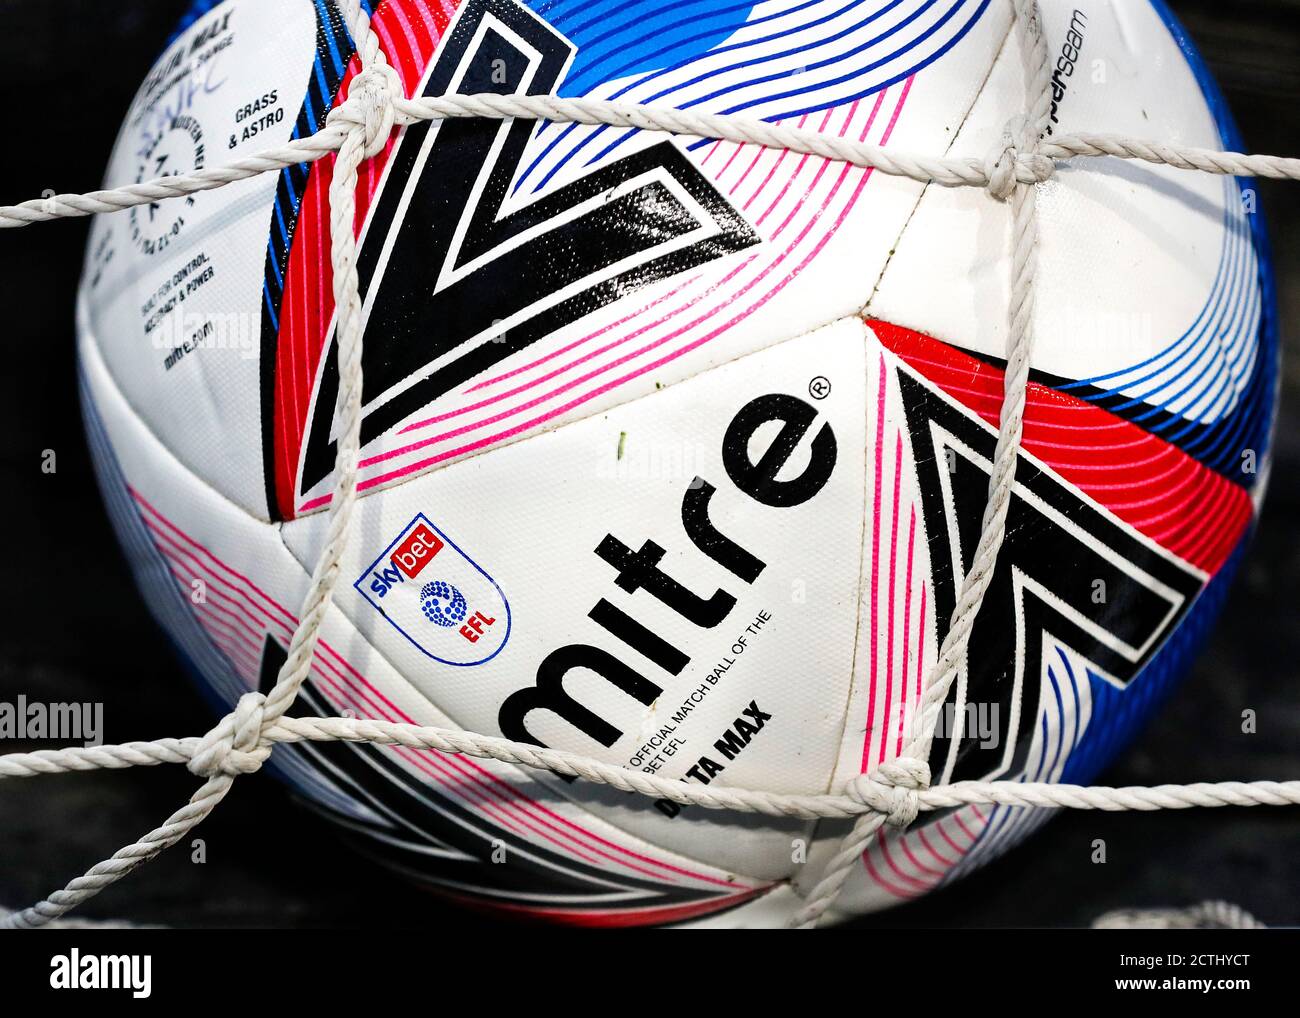 Mitre Delta EFL 2020/21 Replica Training Football Soccer Ball White/Blue/Red 